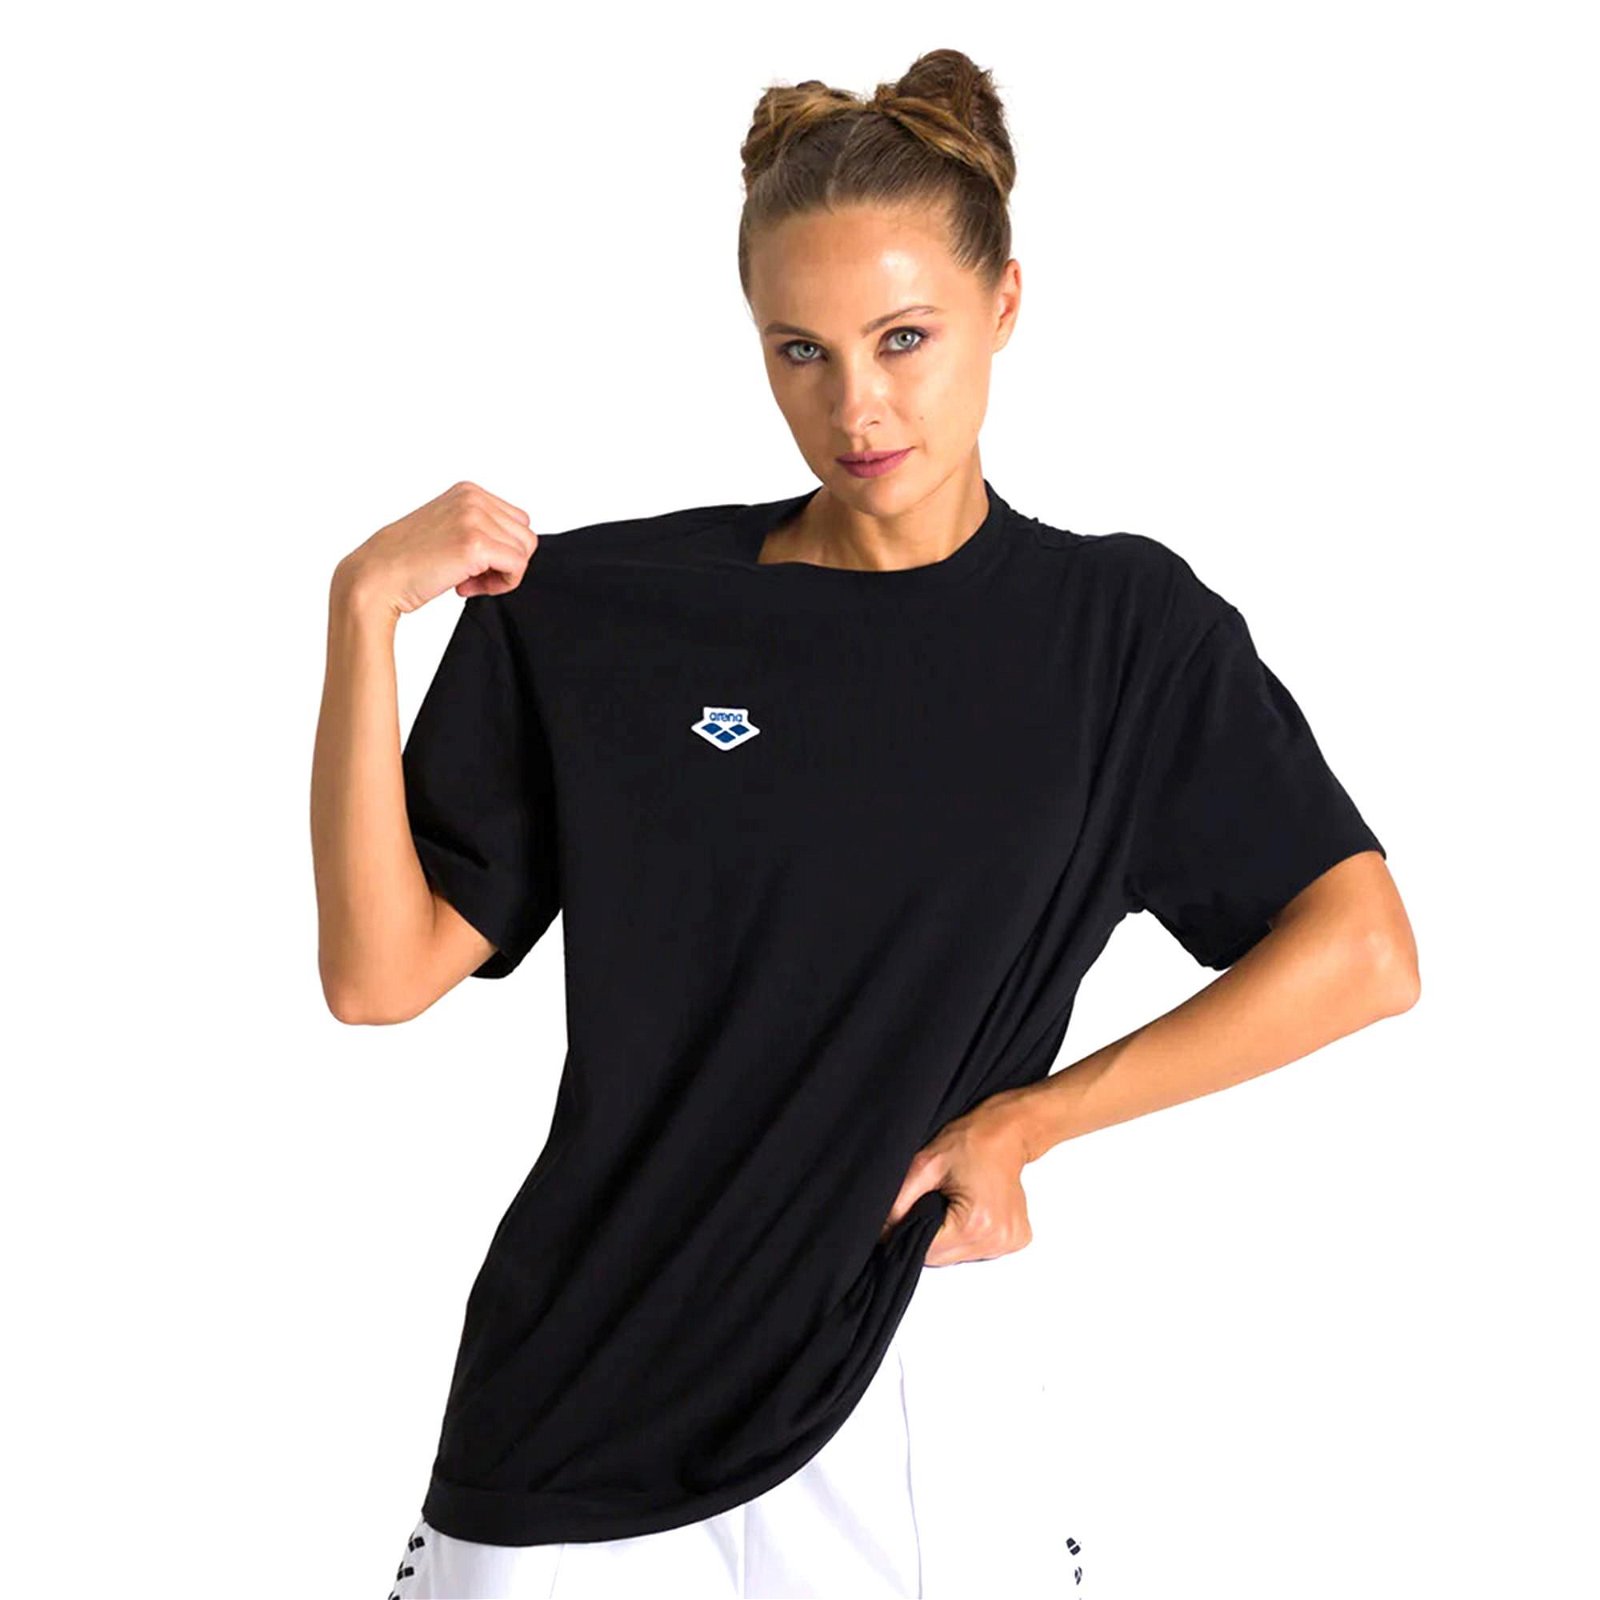 Arn Kadın Siyah Günlük Stil T-Shirt 003073500